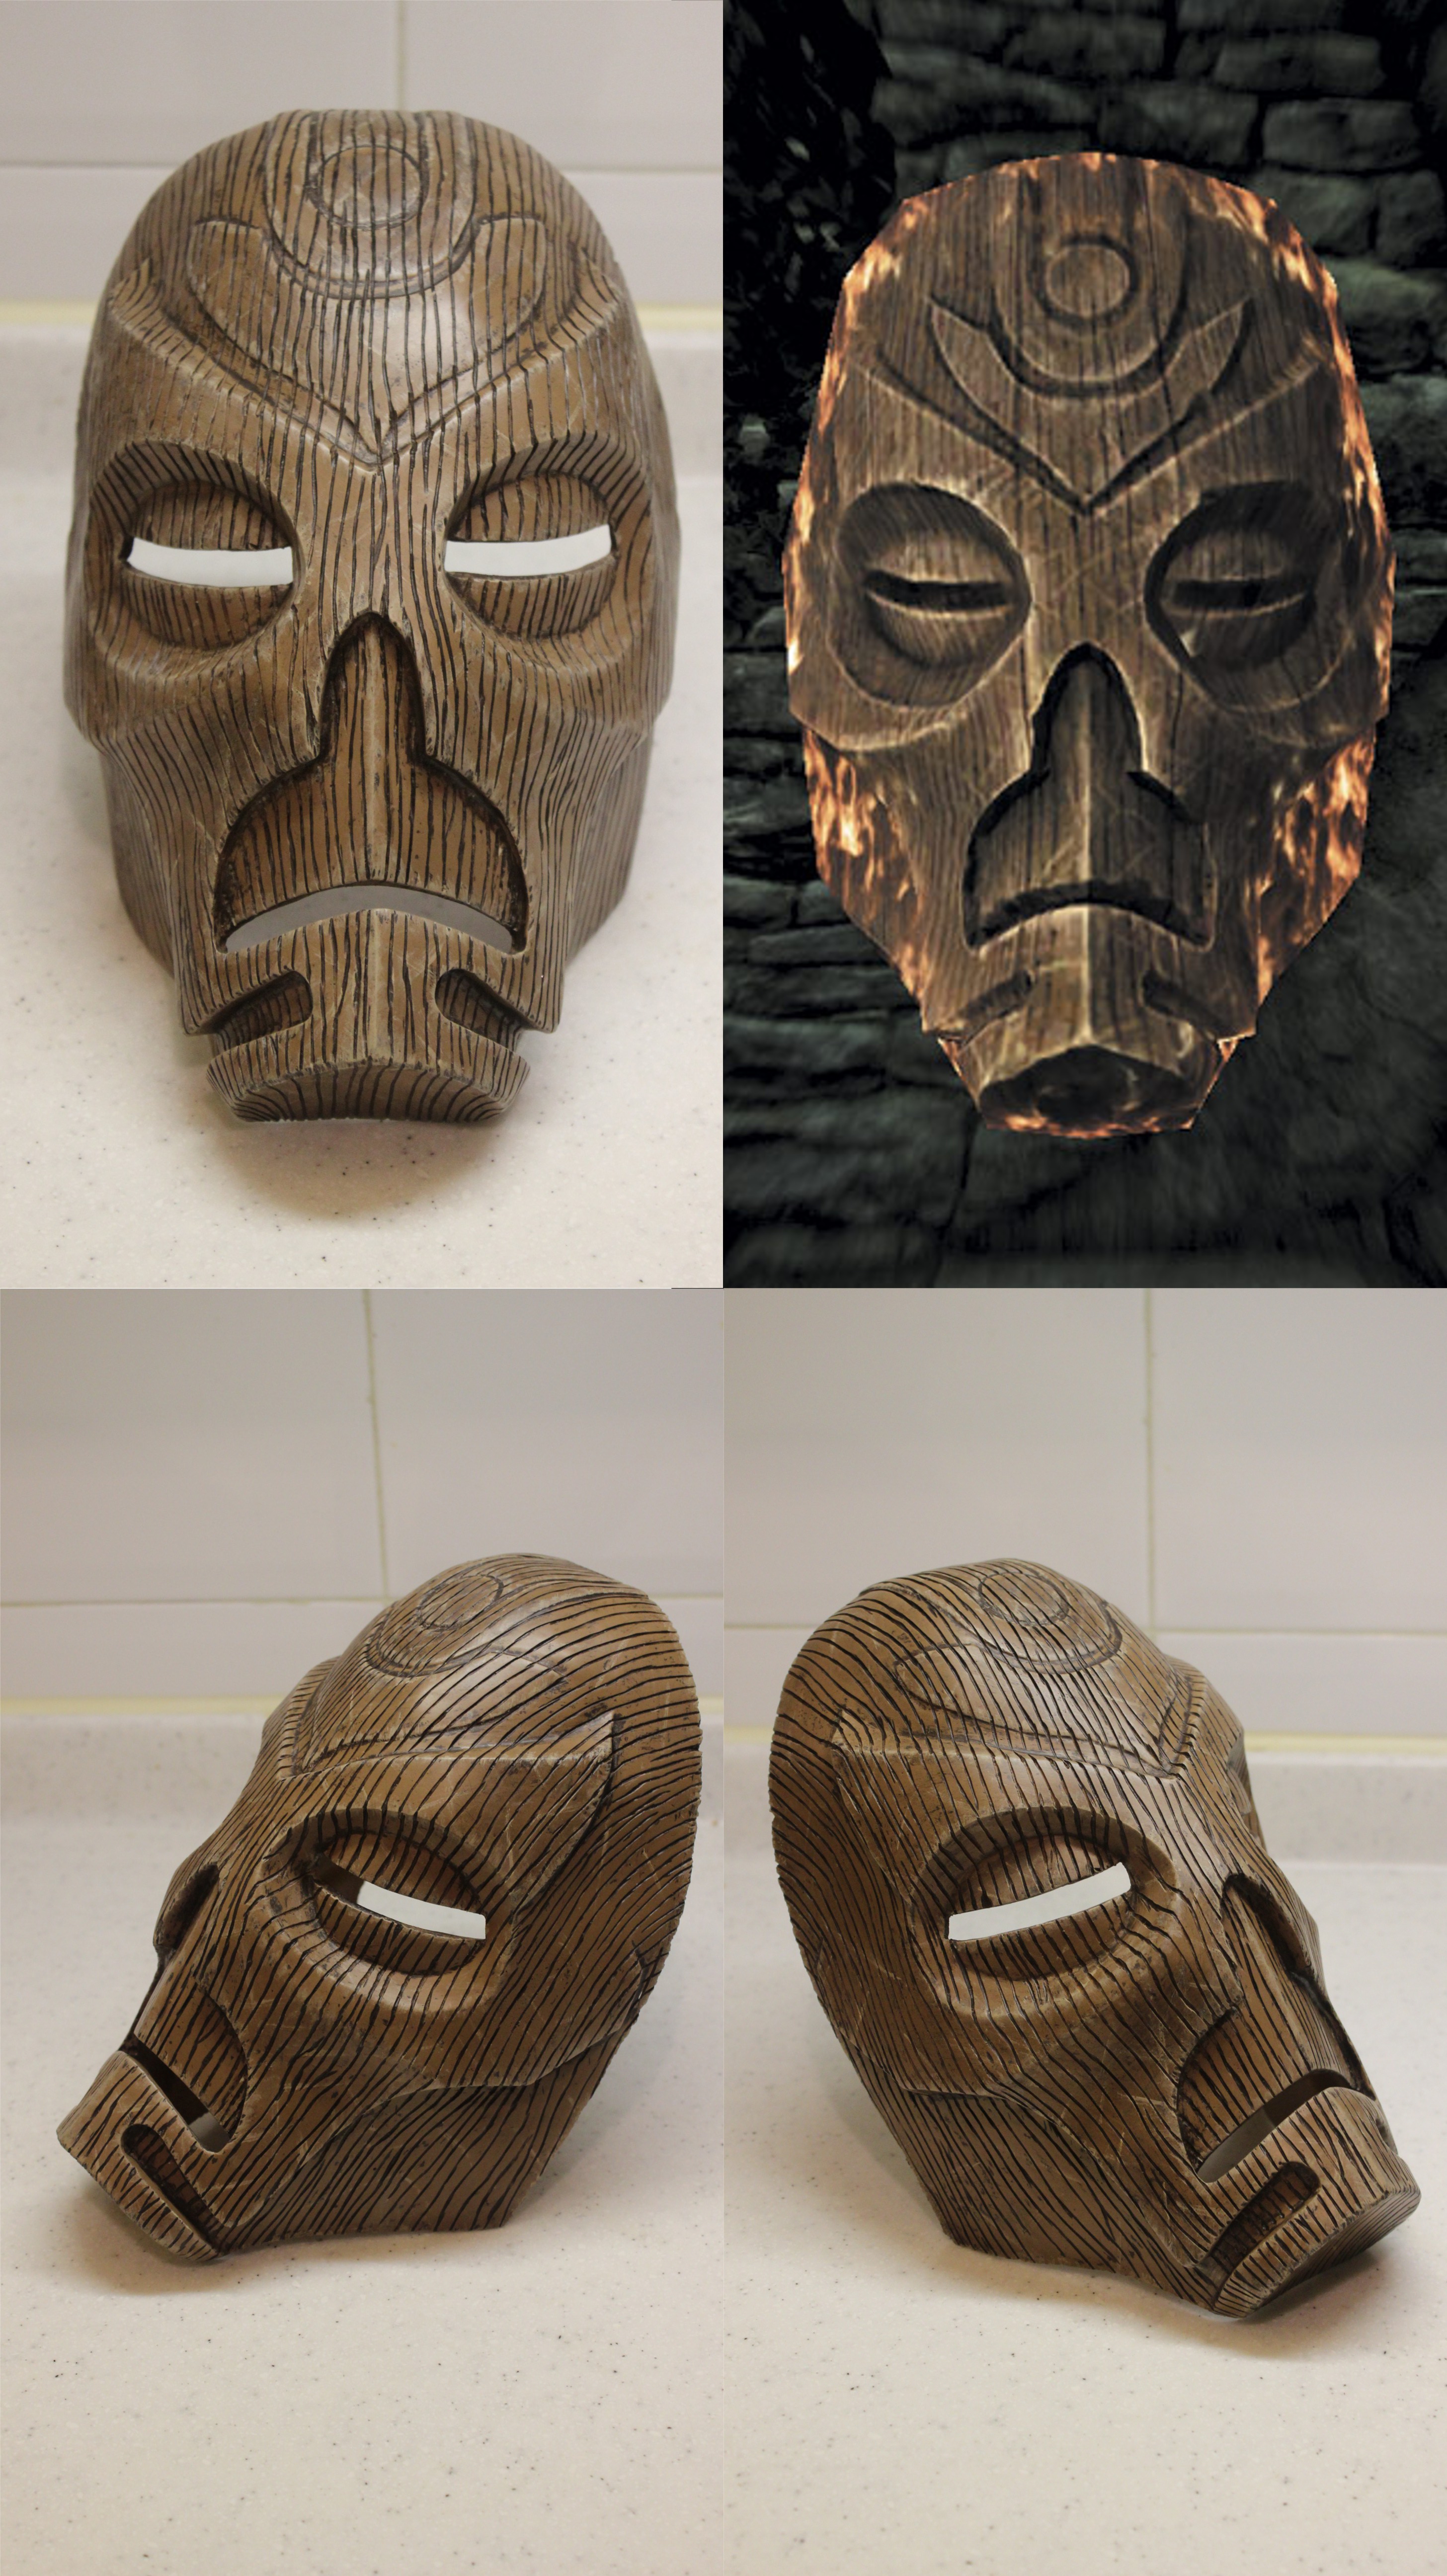 Skyrim Wooden mask by KRSprops on DeviantArt